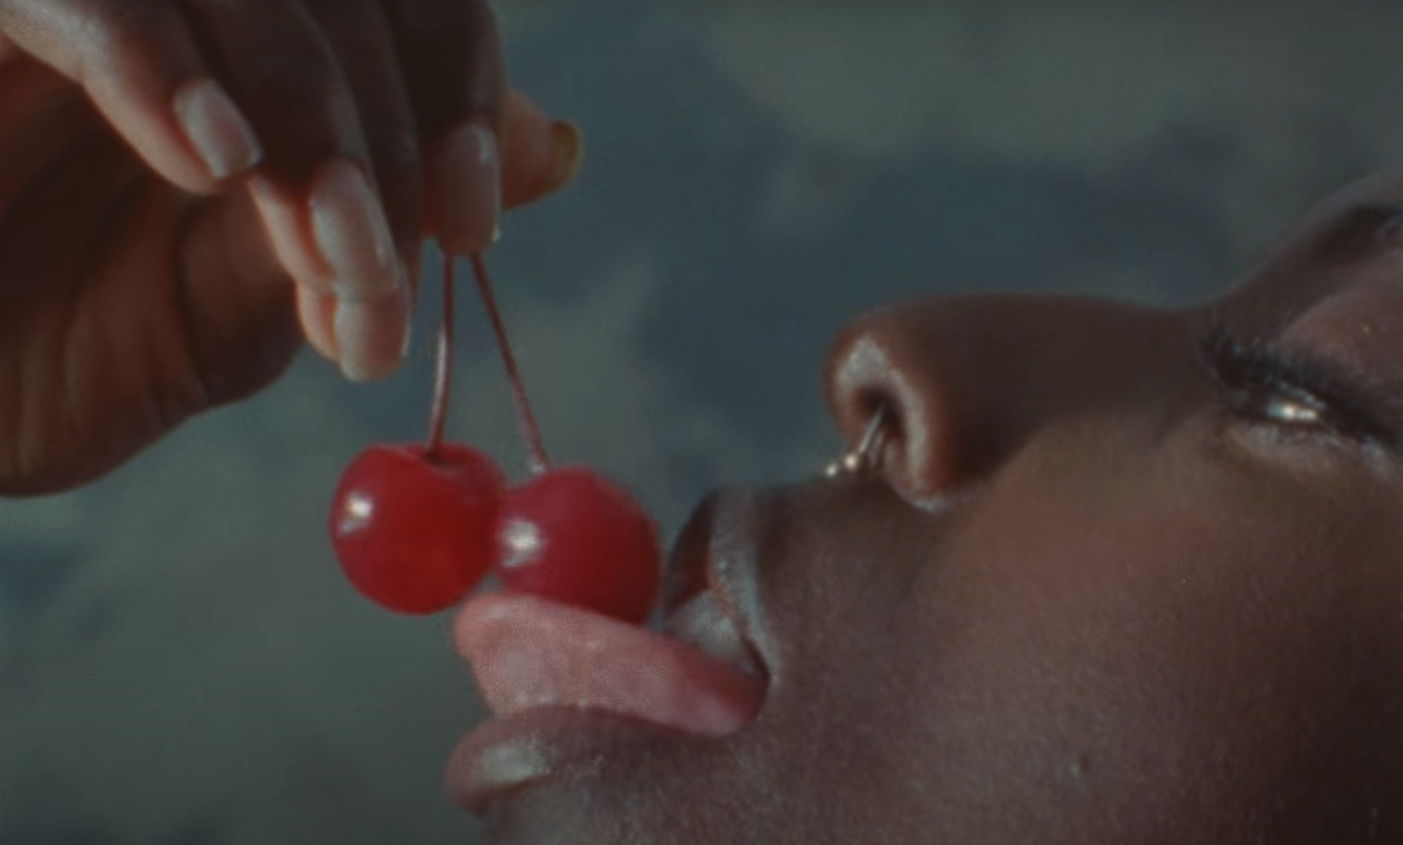 Someone licking two cherries